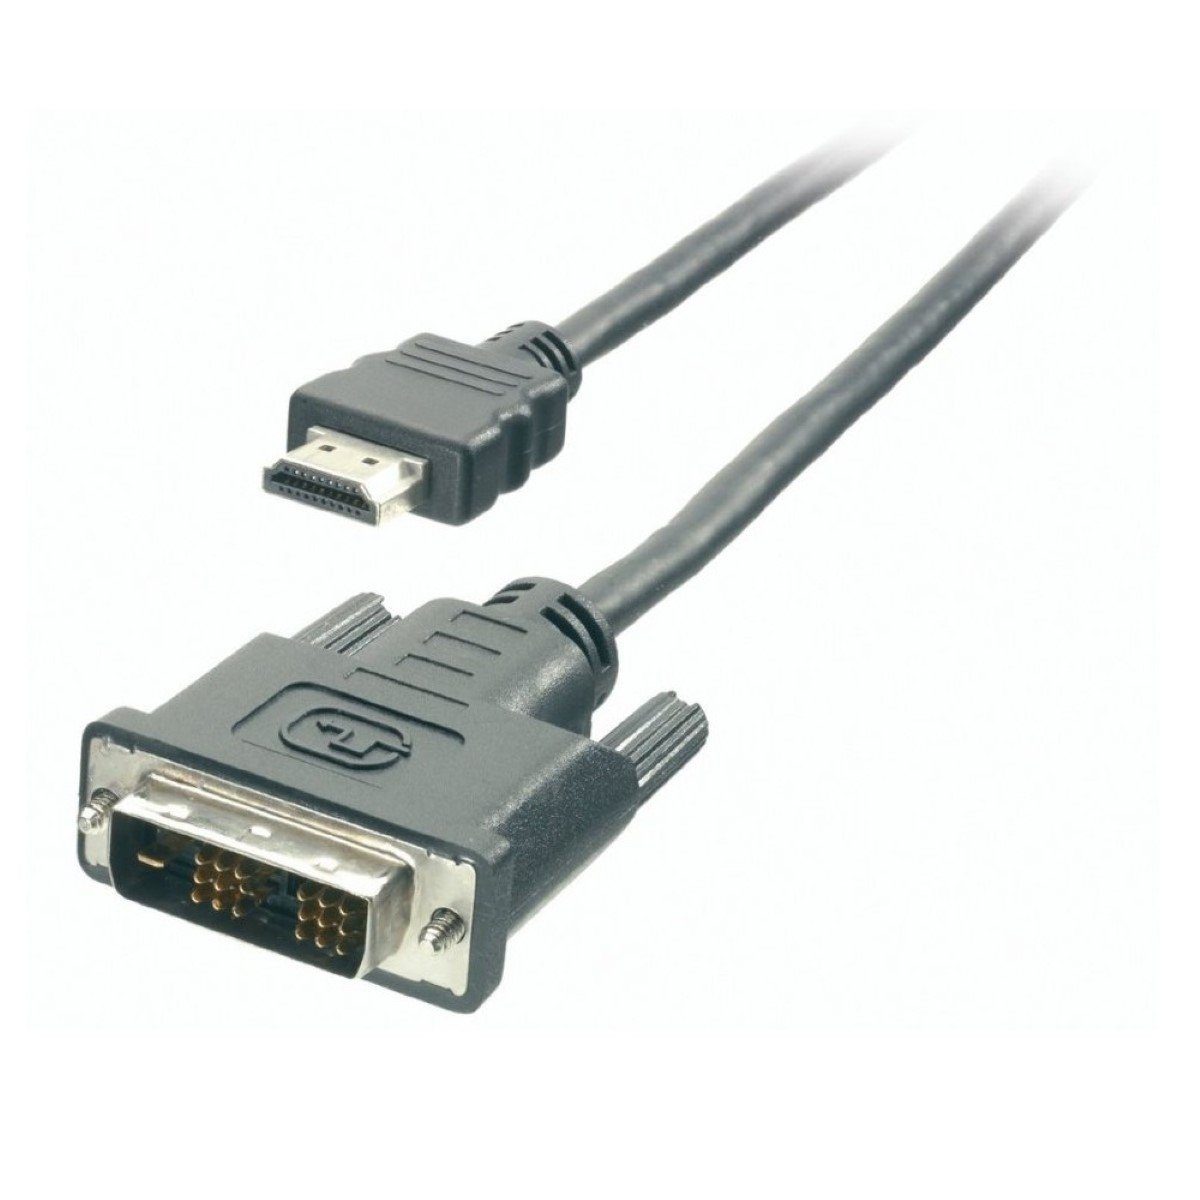 Vivaco HQ 5m HDMI-Stecker auf DVI-D Single Link Video-Adapter DVI-D, 500  cm, TV Adapter-Kabel, Verbindungs-Kabel, HD-TV PC, Geschwindigkeit 5 Gbit/s